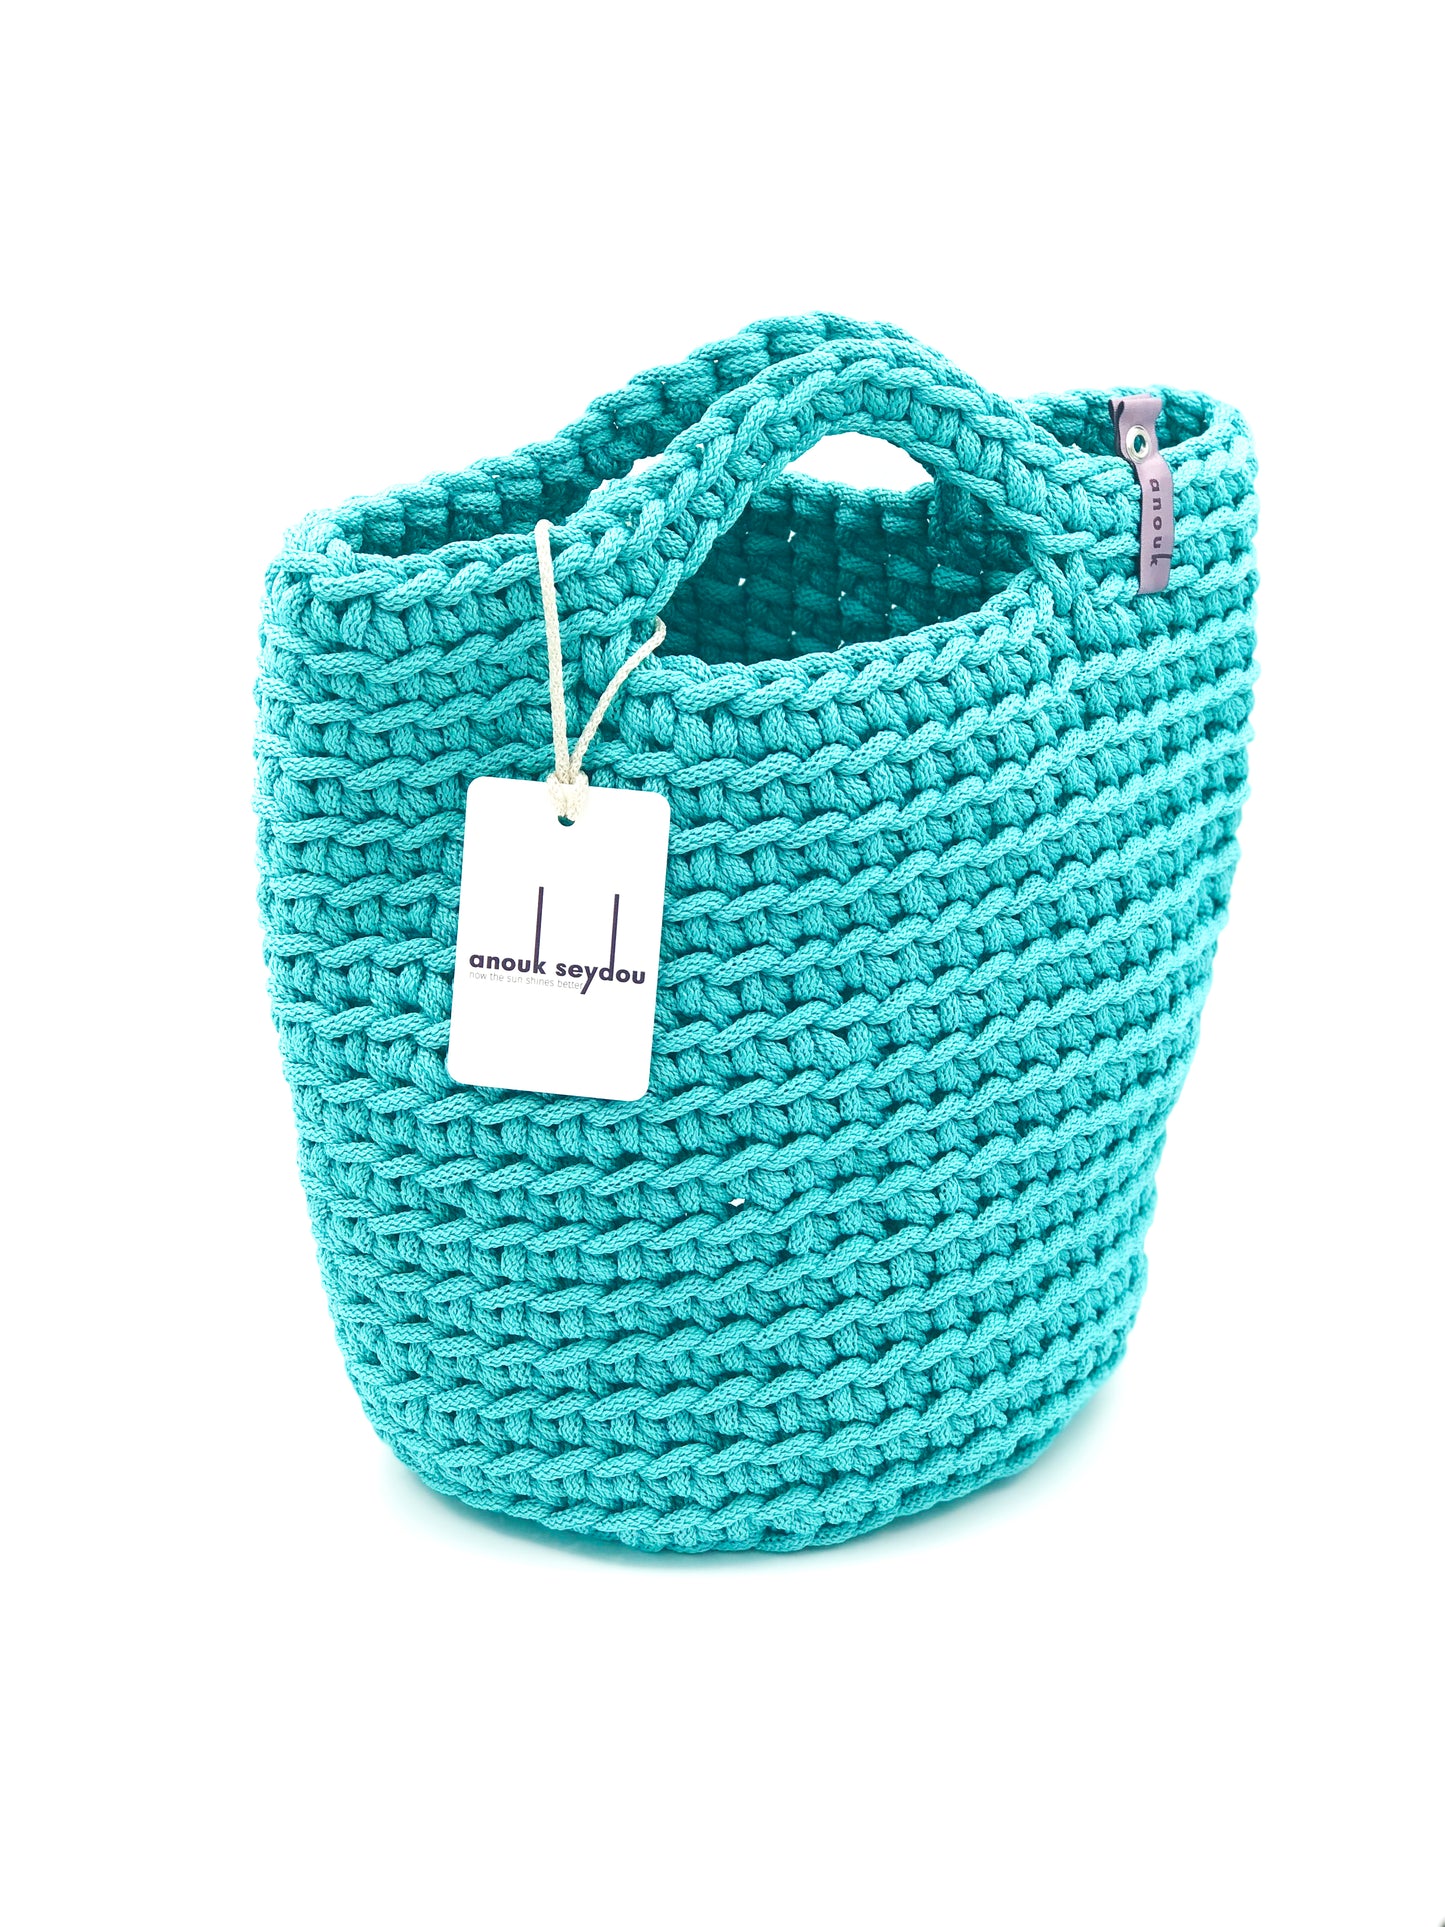 Scandinavian Style Handmade Crochet Tote Bag Teal with Short Handles